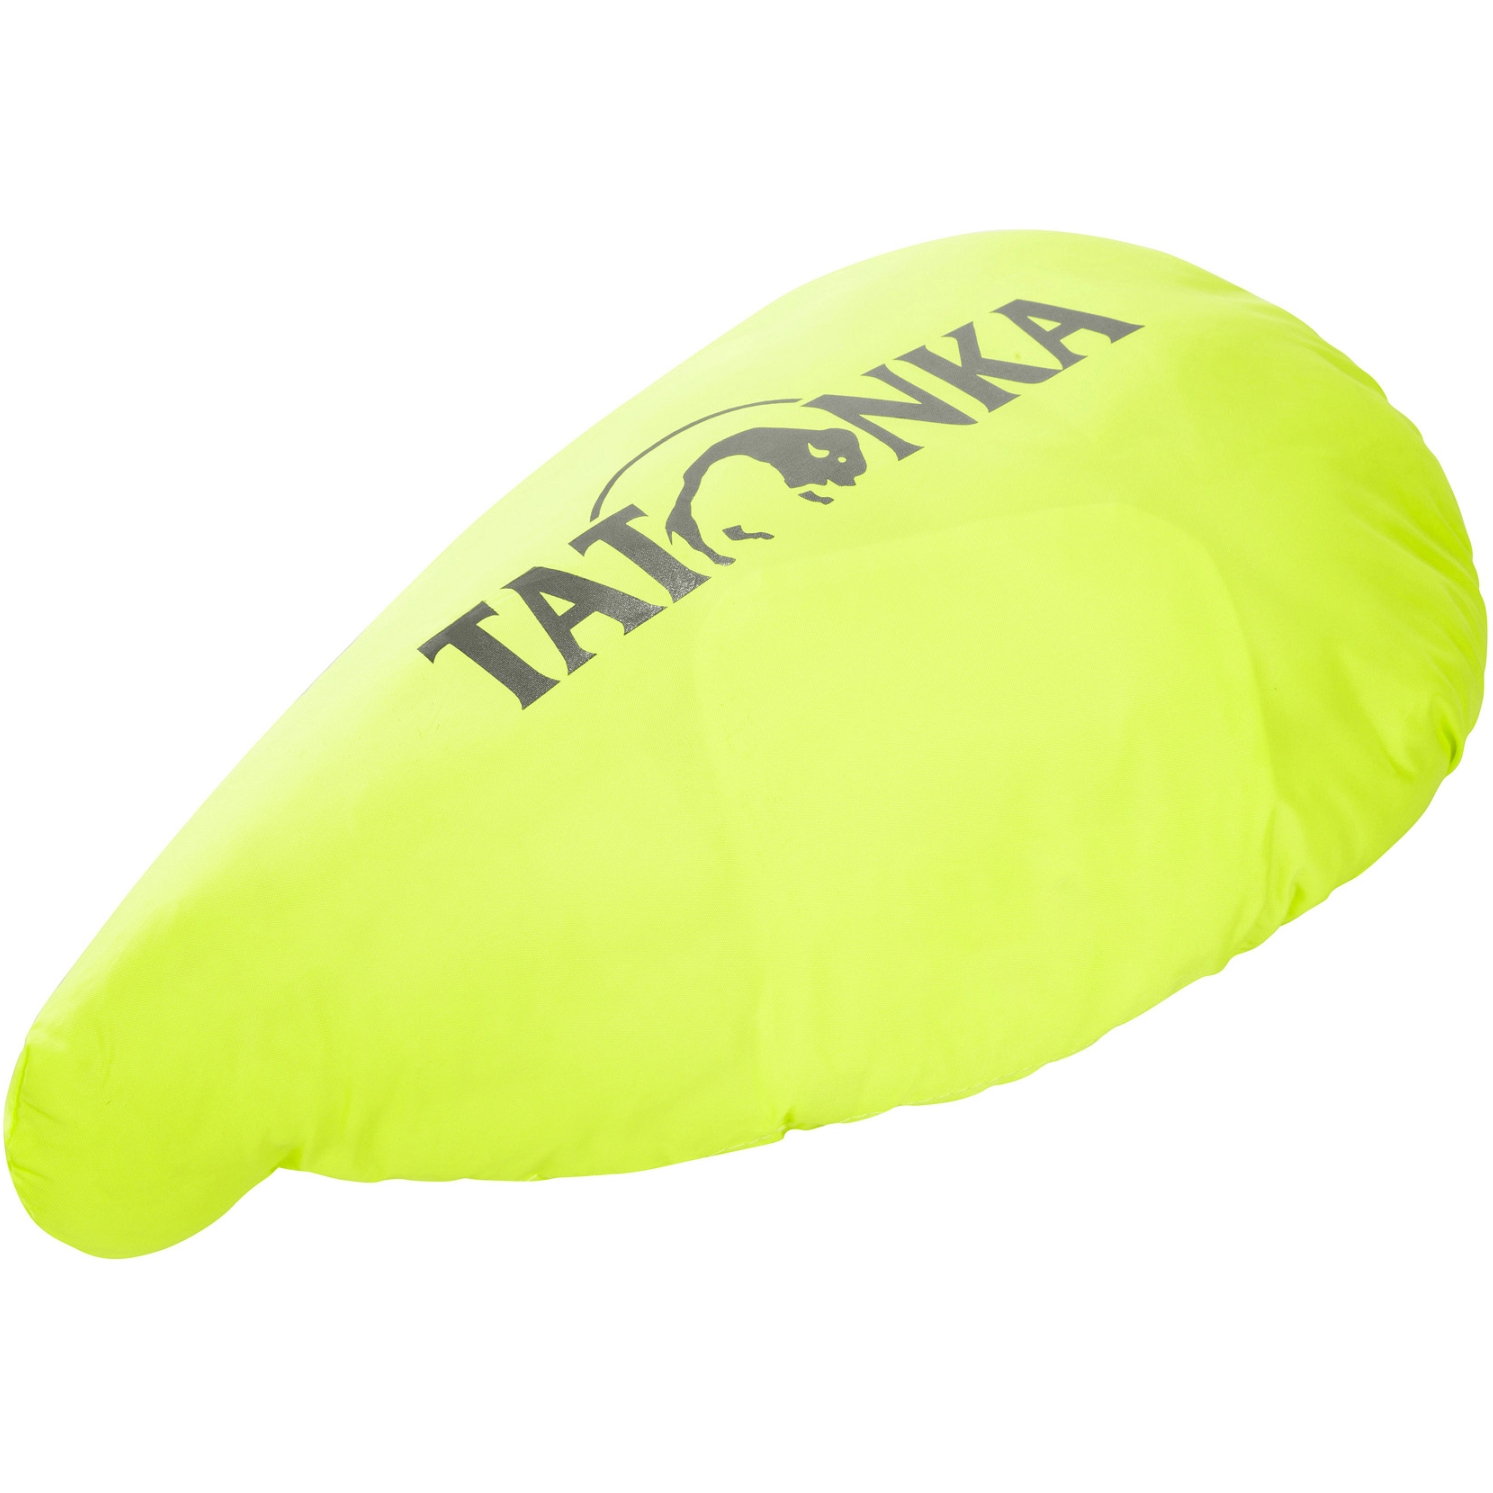 Productfoto van Tatonka Saddle Cover - safety yellow